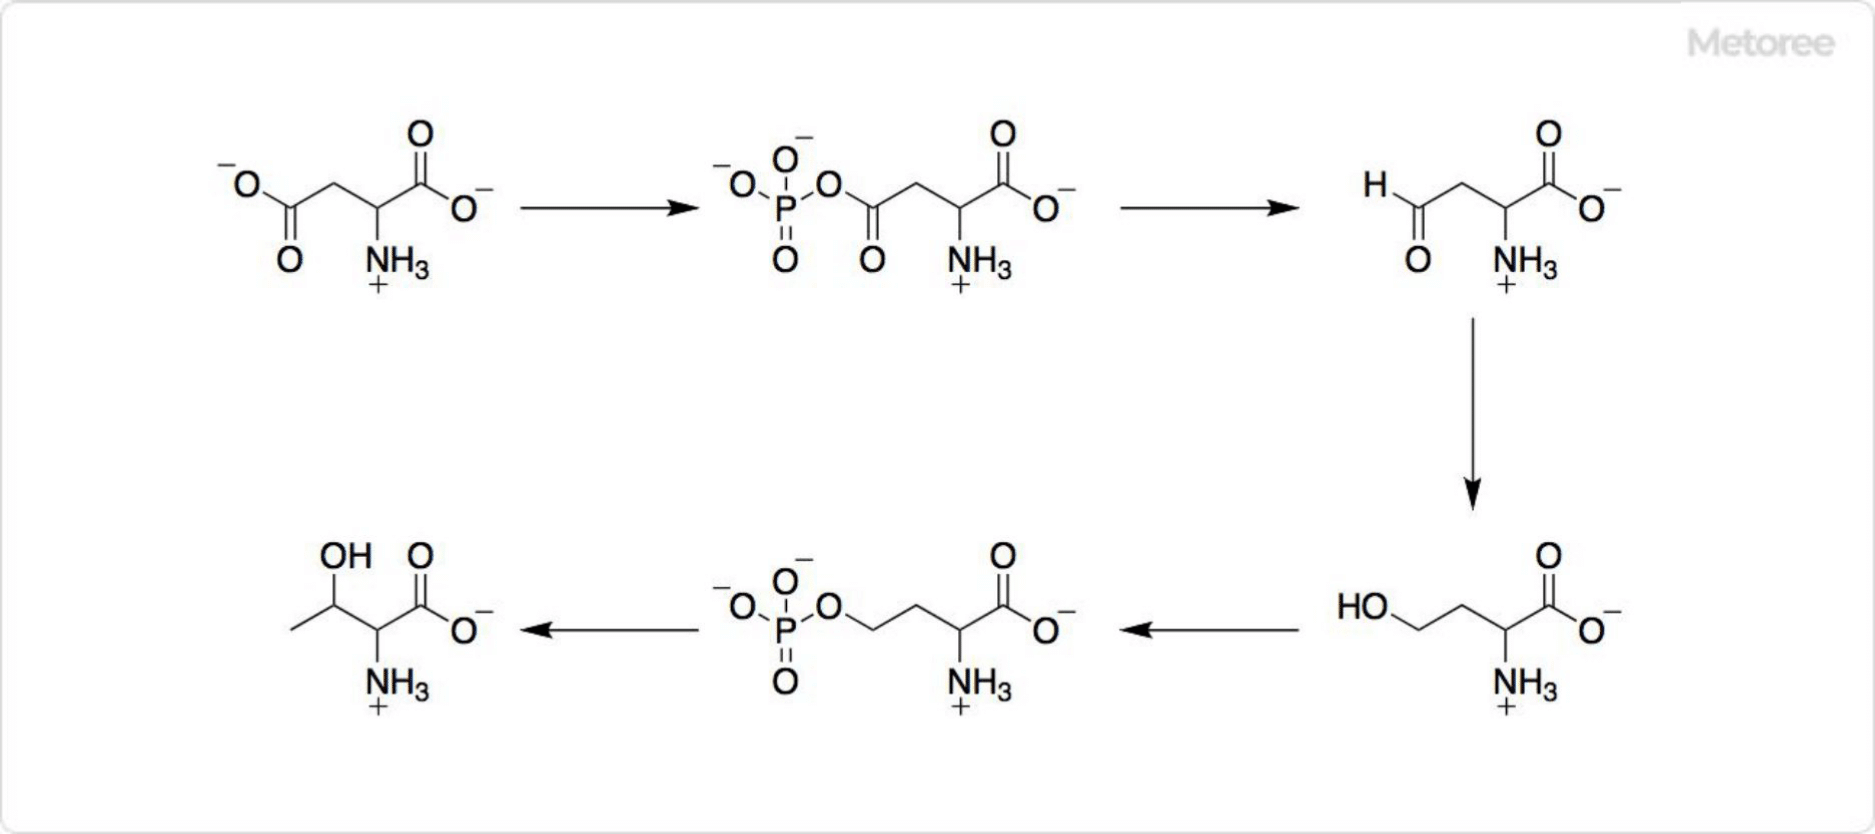 Biosynthesis of L-Threonine